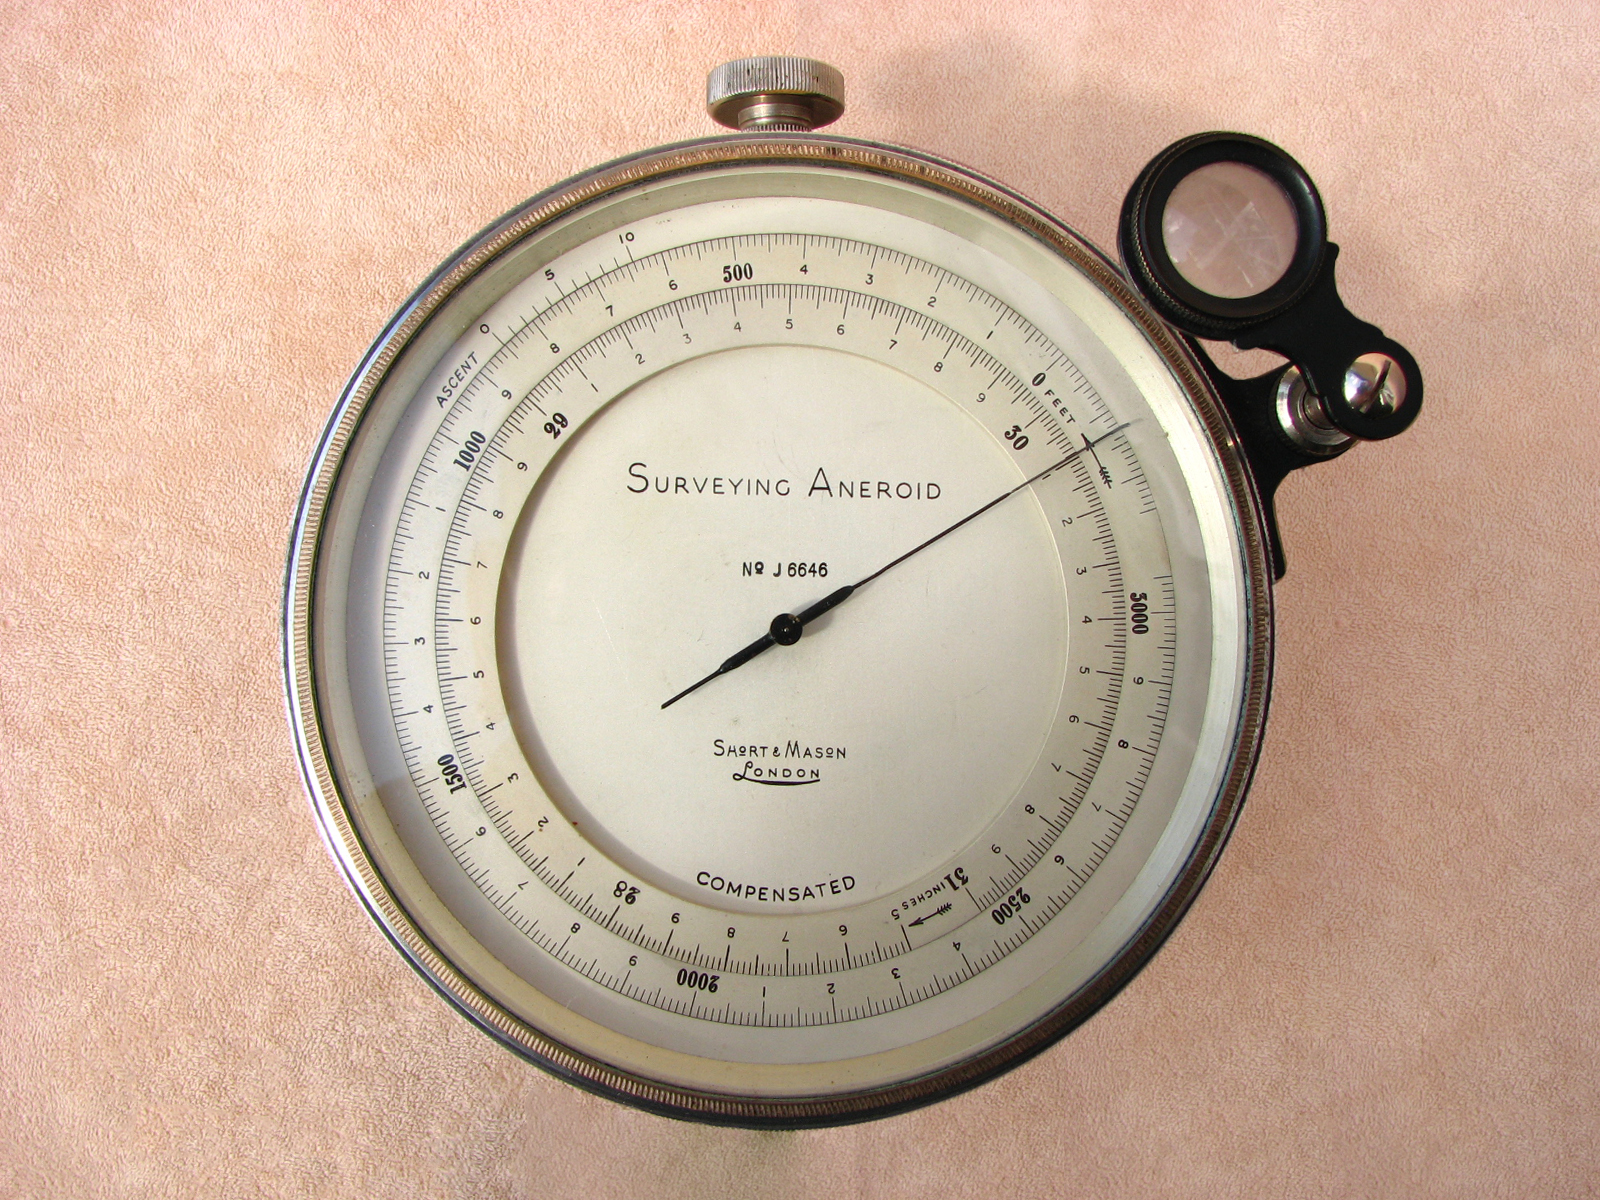 Impressive Short & Mason precision surveying barometer & altimeter with case